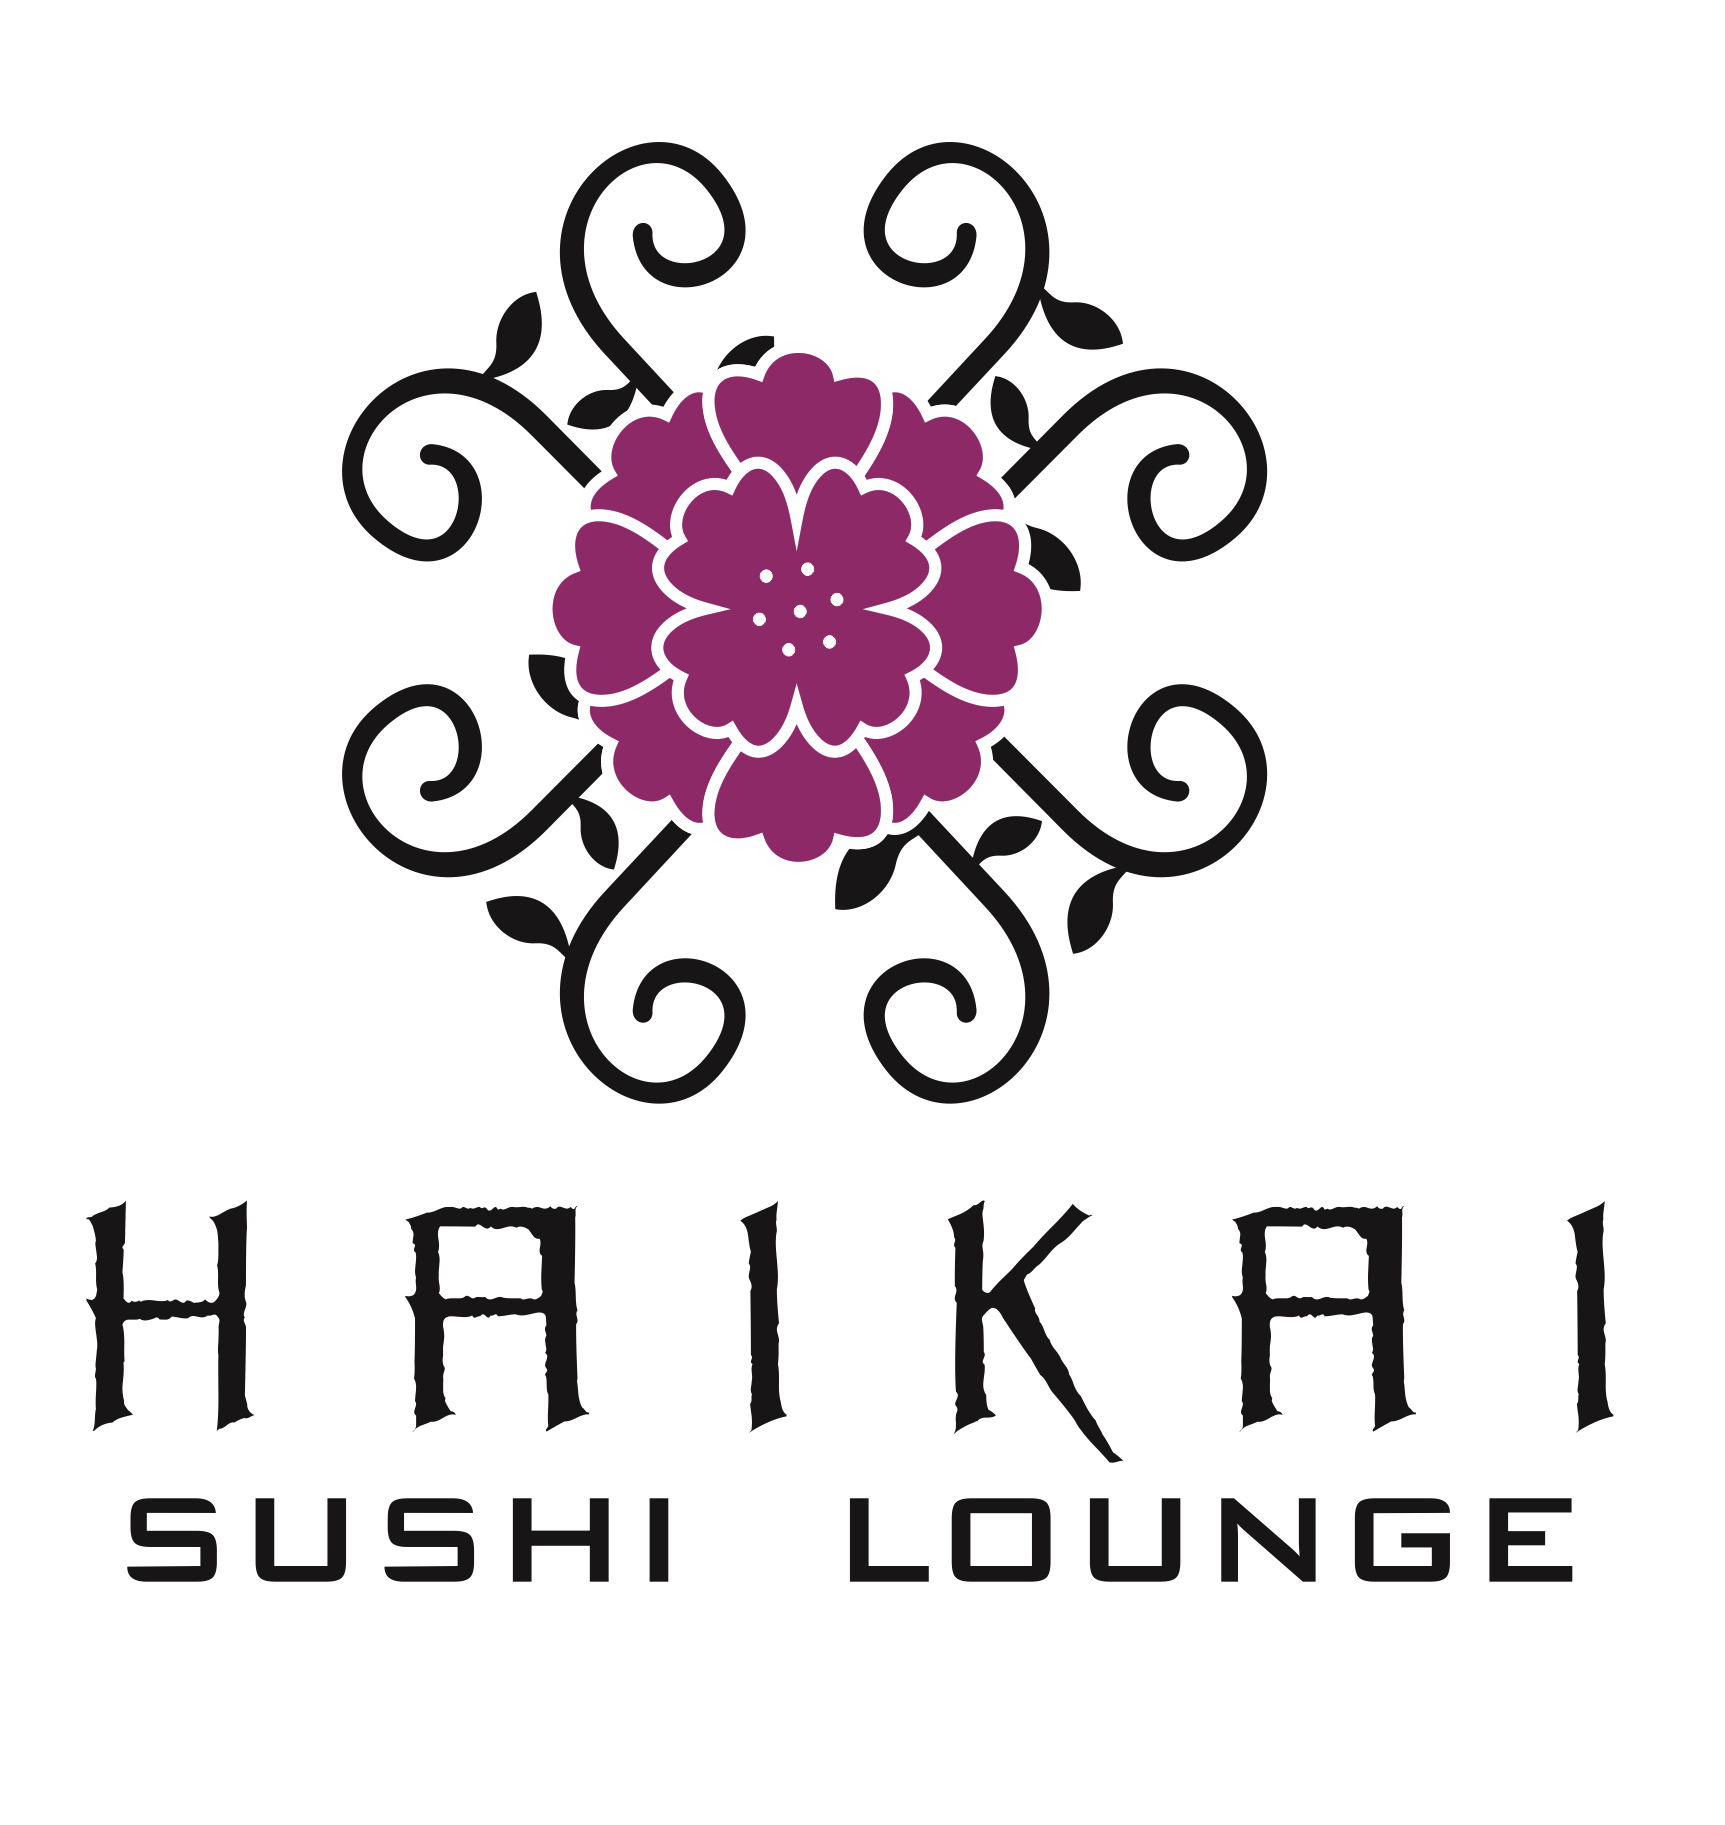 Haikai Sushi Lounge